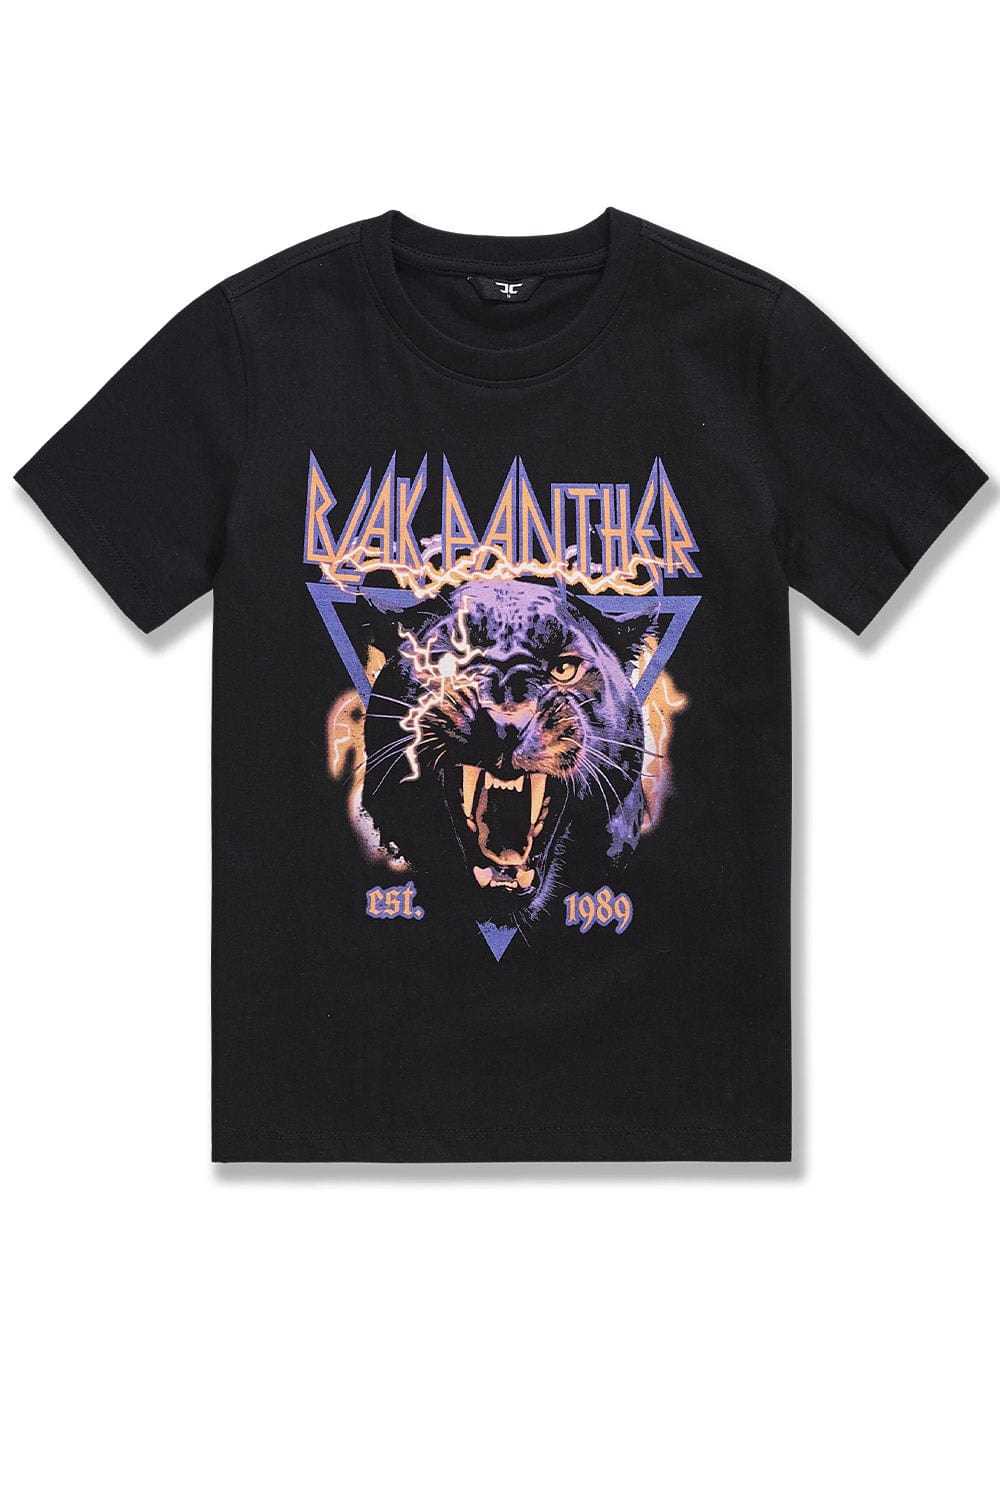 JC Kids Kids Blak Panther T-Shirt (Black) 2 / Black